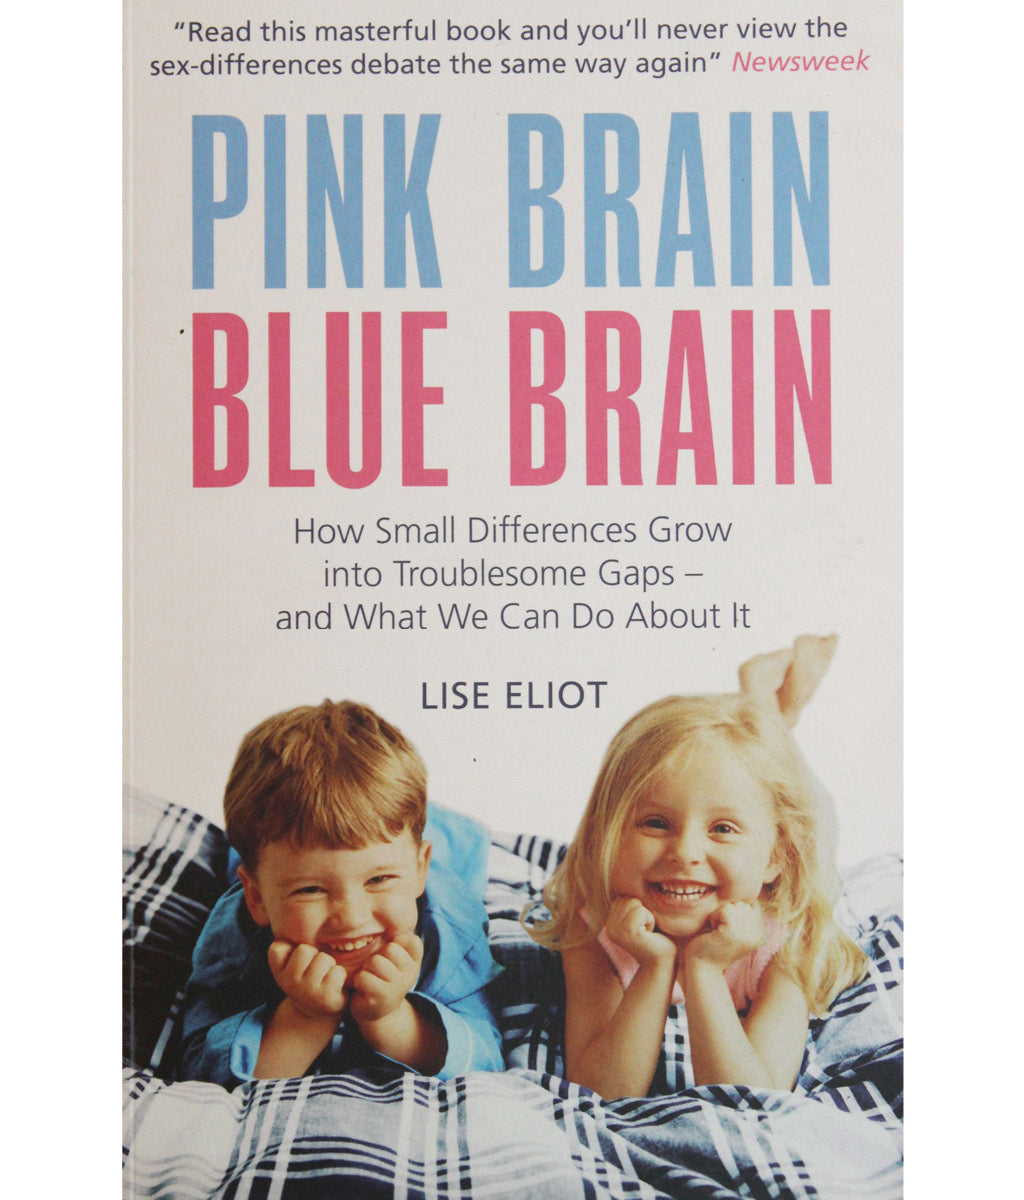 Pink Brain Blue Brain by Lise Eliot